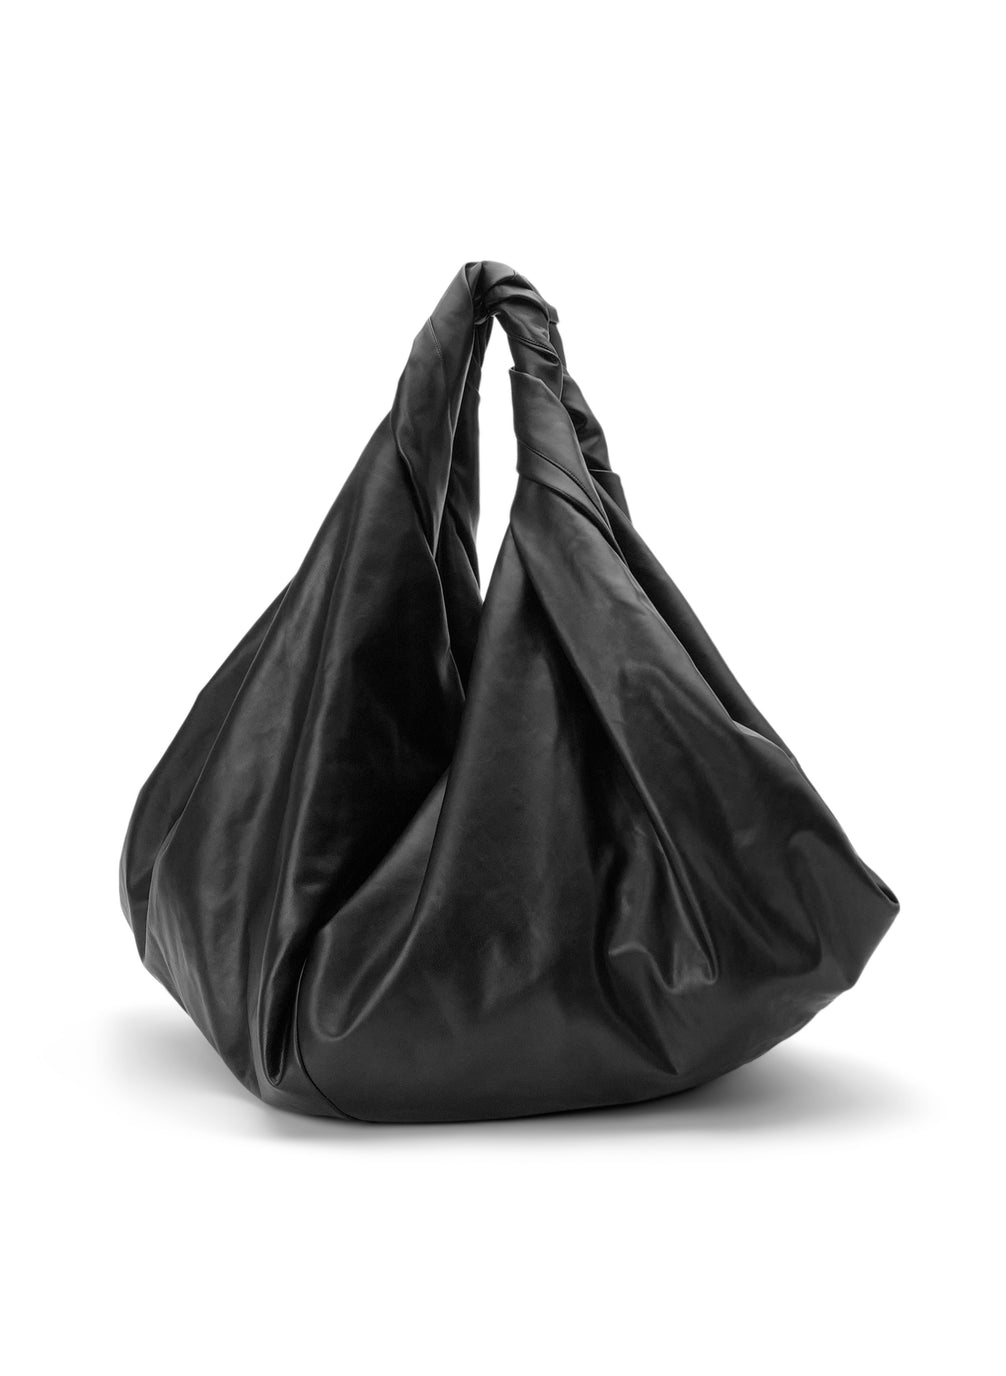 patent leather purse